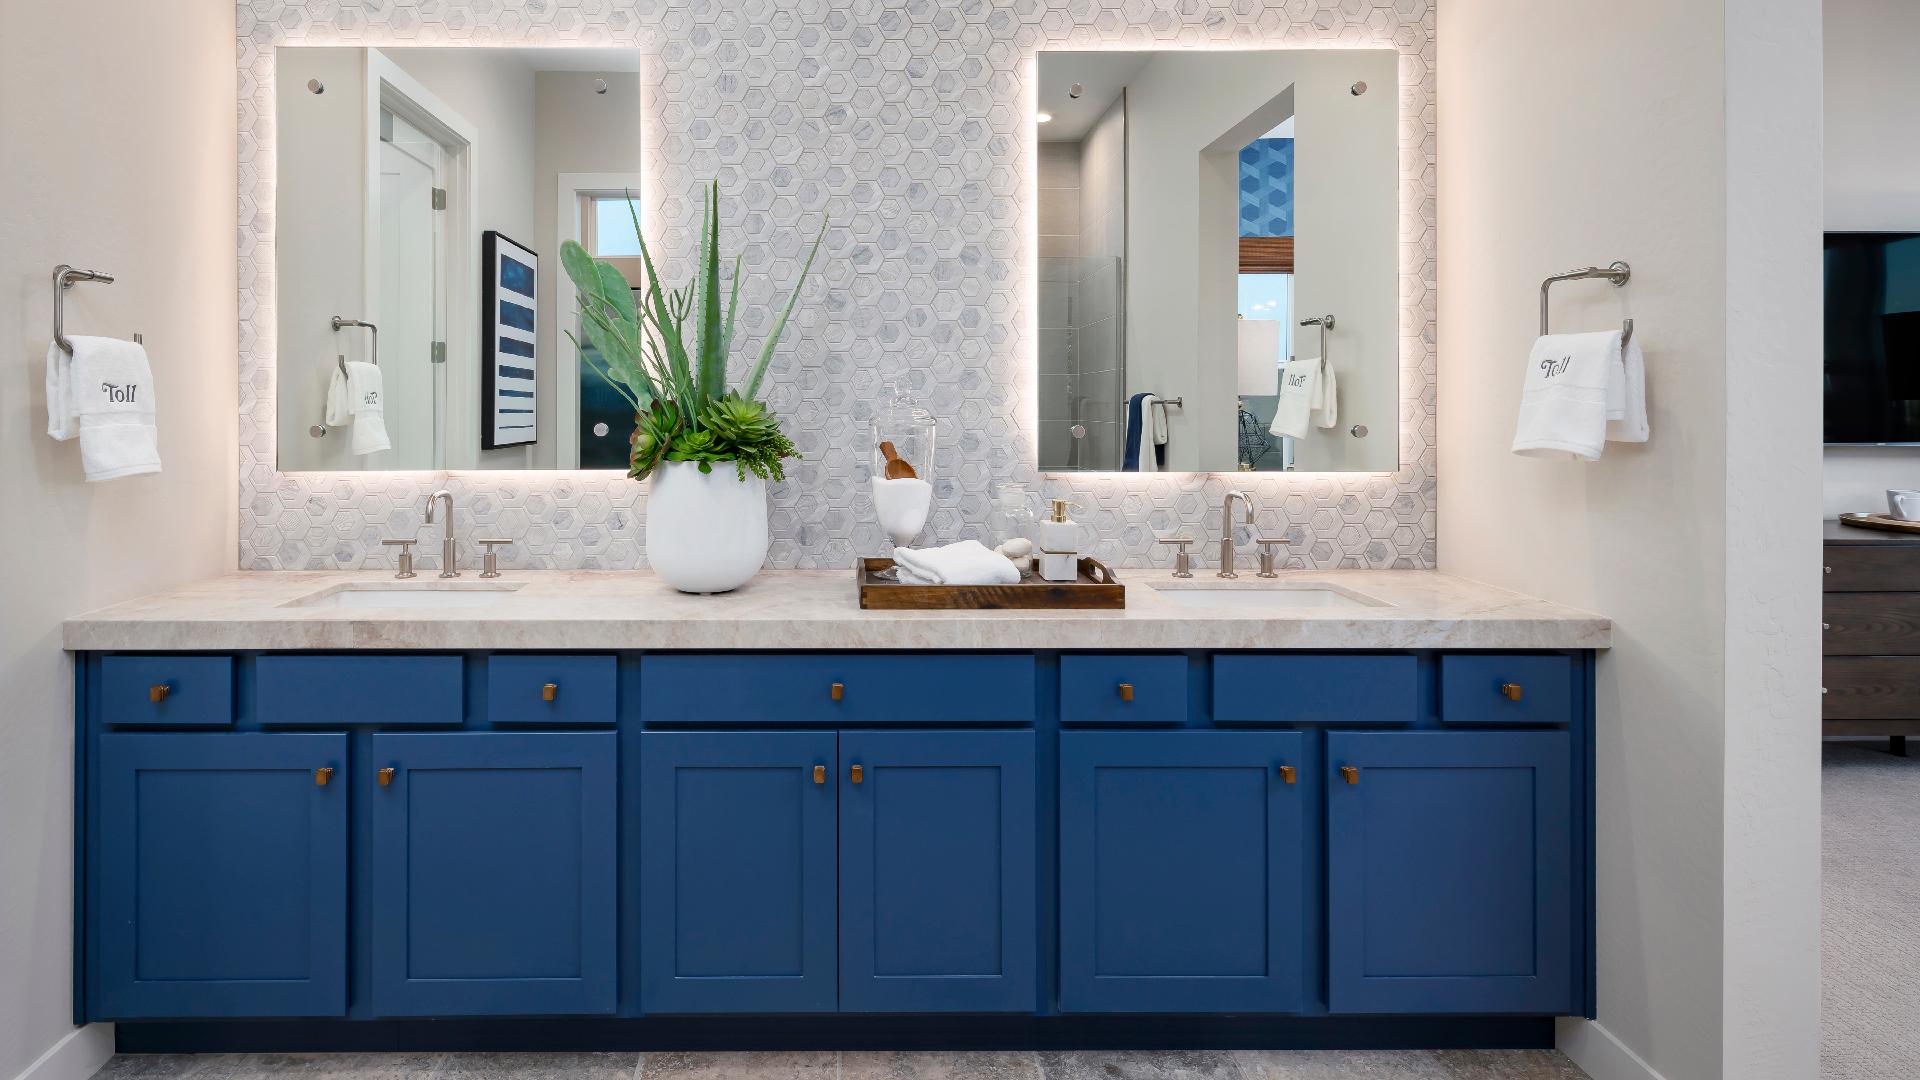 Primary bathroom with dual-sink vanity and beautiful backsplash